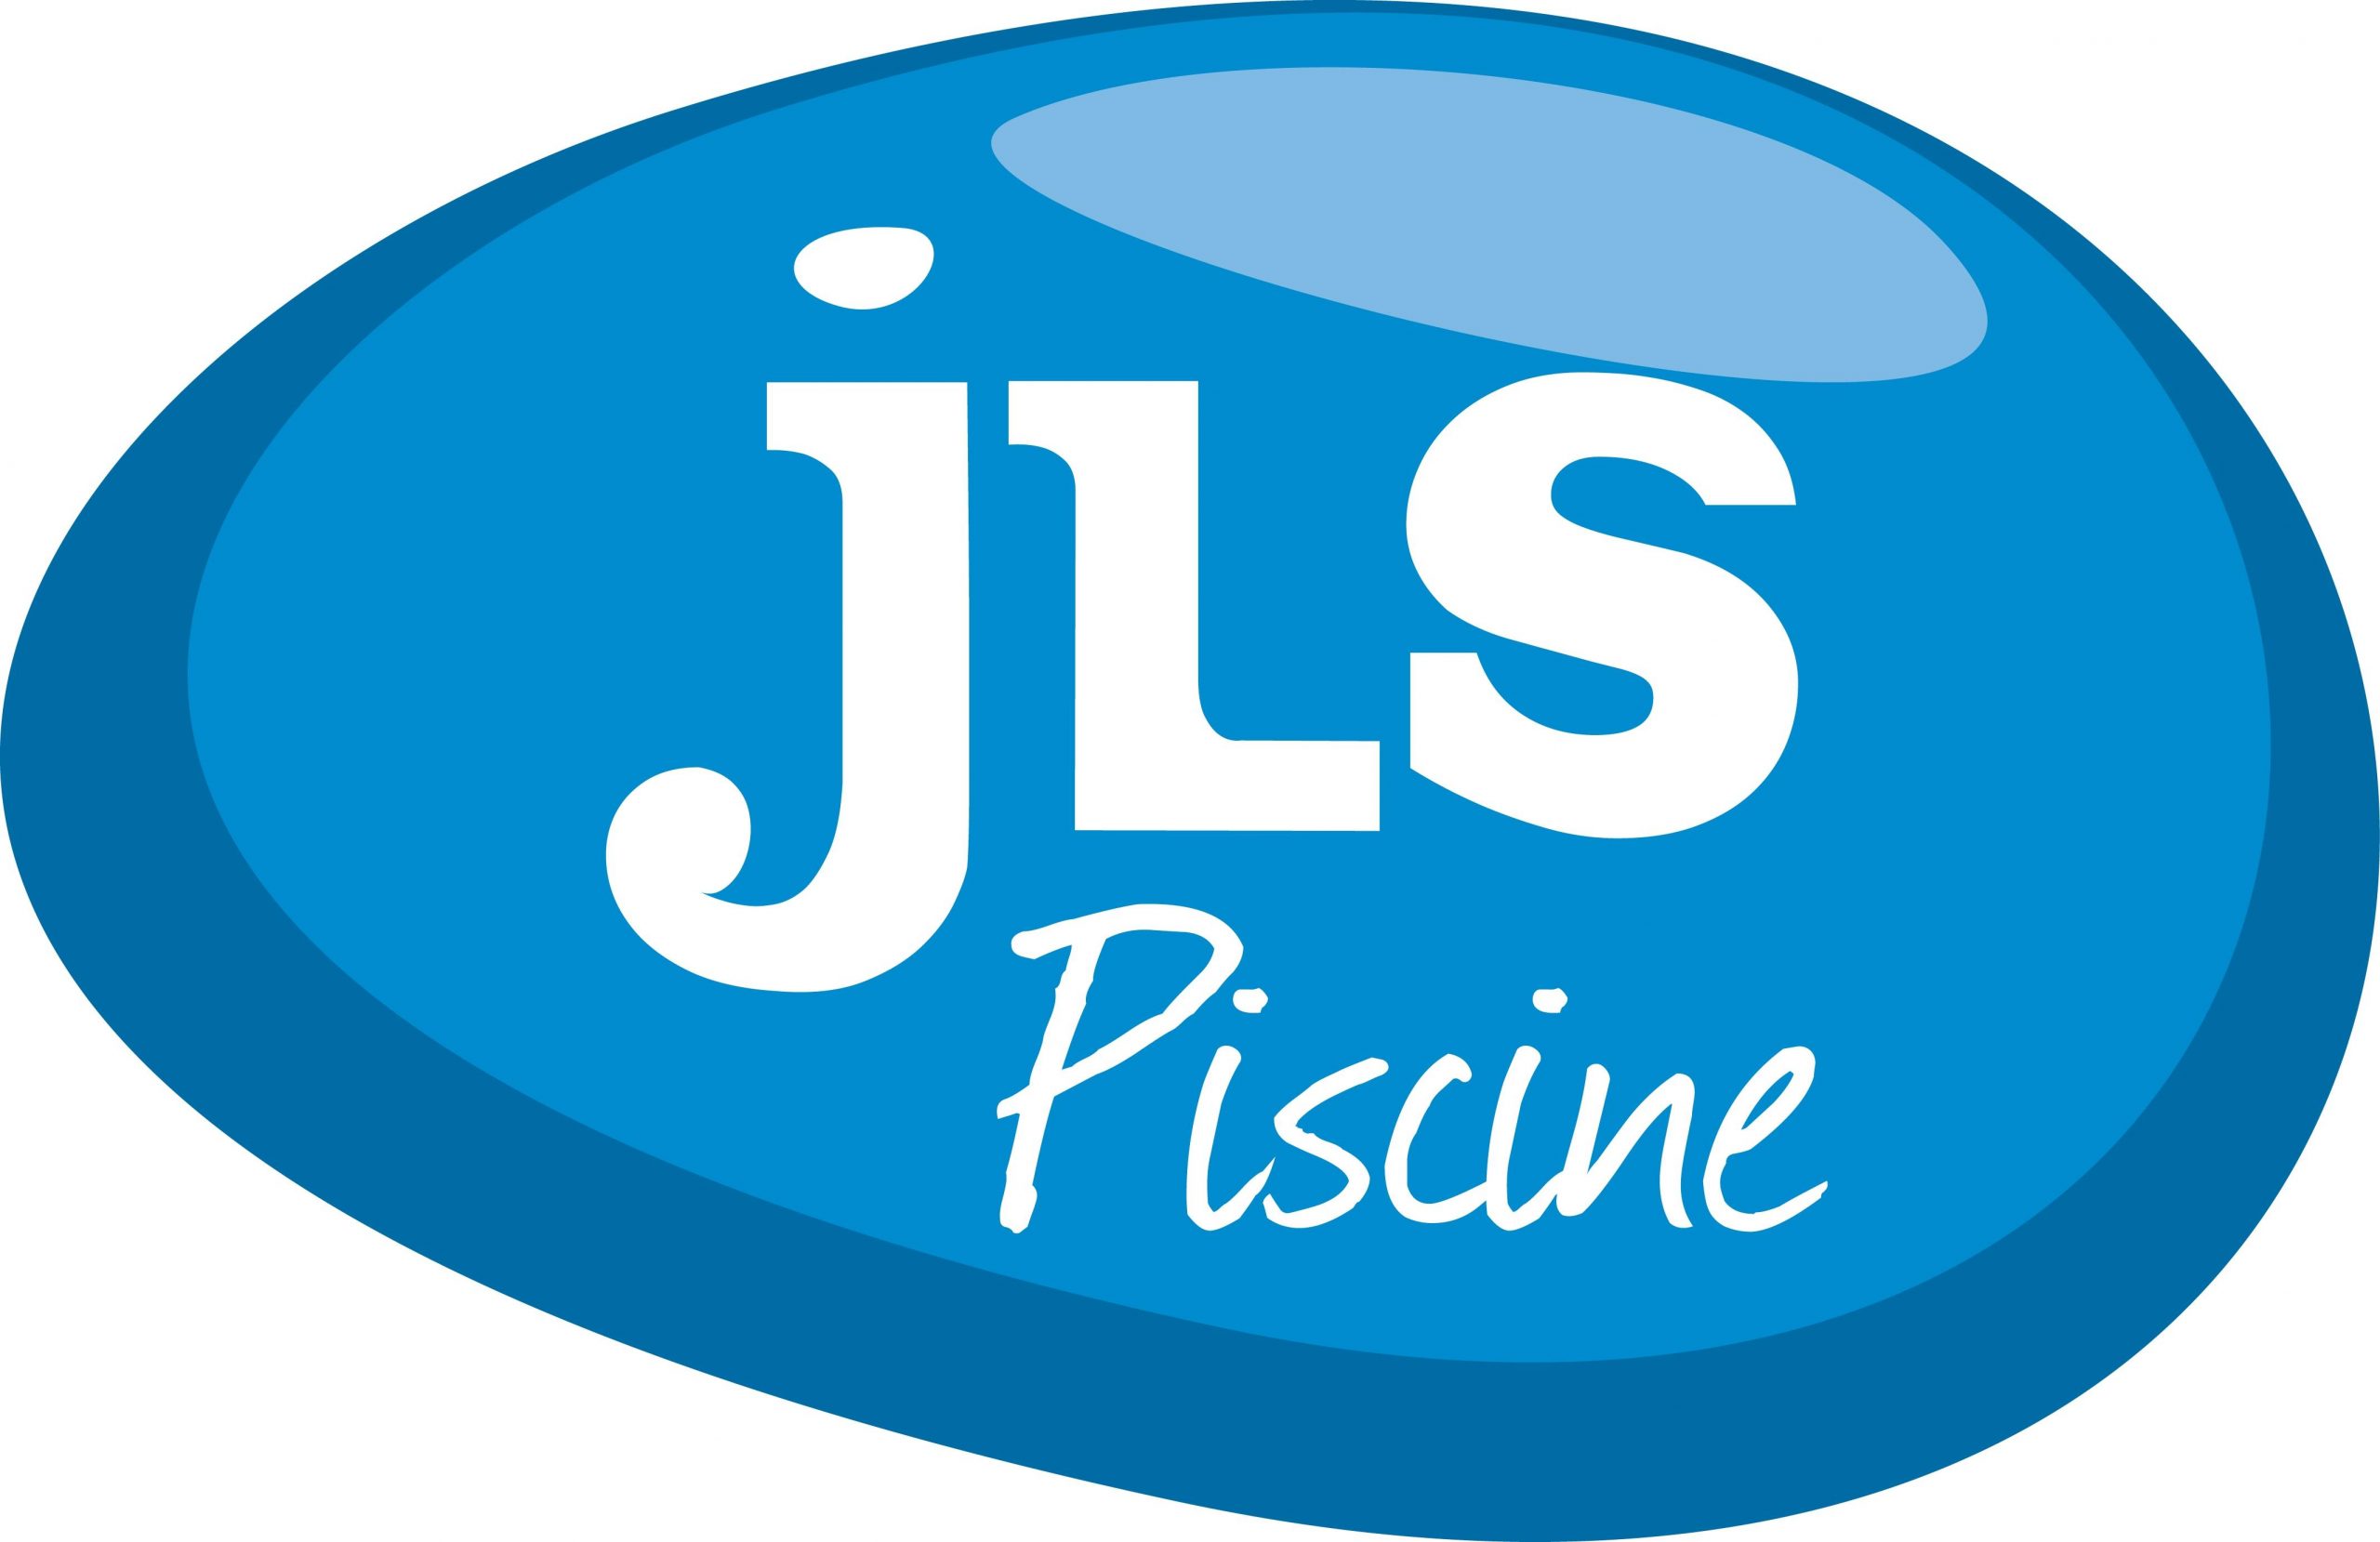 Jls Piscines - Excel Piscines : Installation Et Matériel De ... intérieur Cash Piscine Pierrelatte